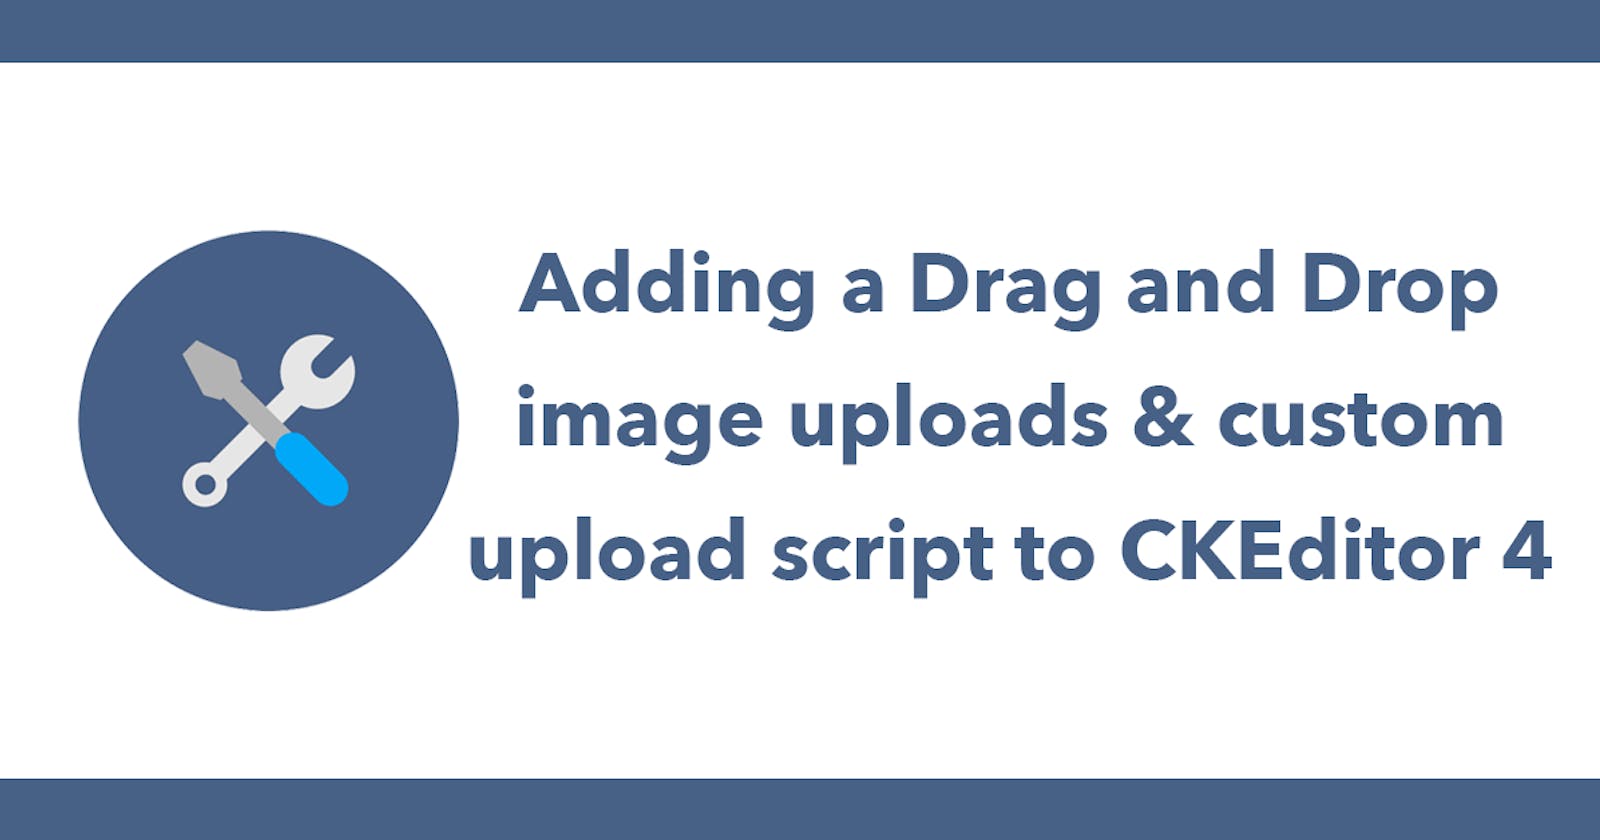 Adding a Drag and Drop image uploads & custom upload script to CKEditor 4